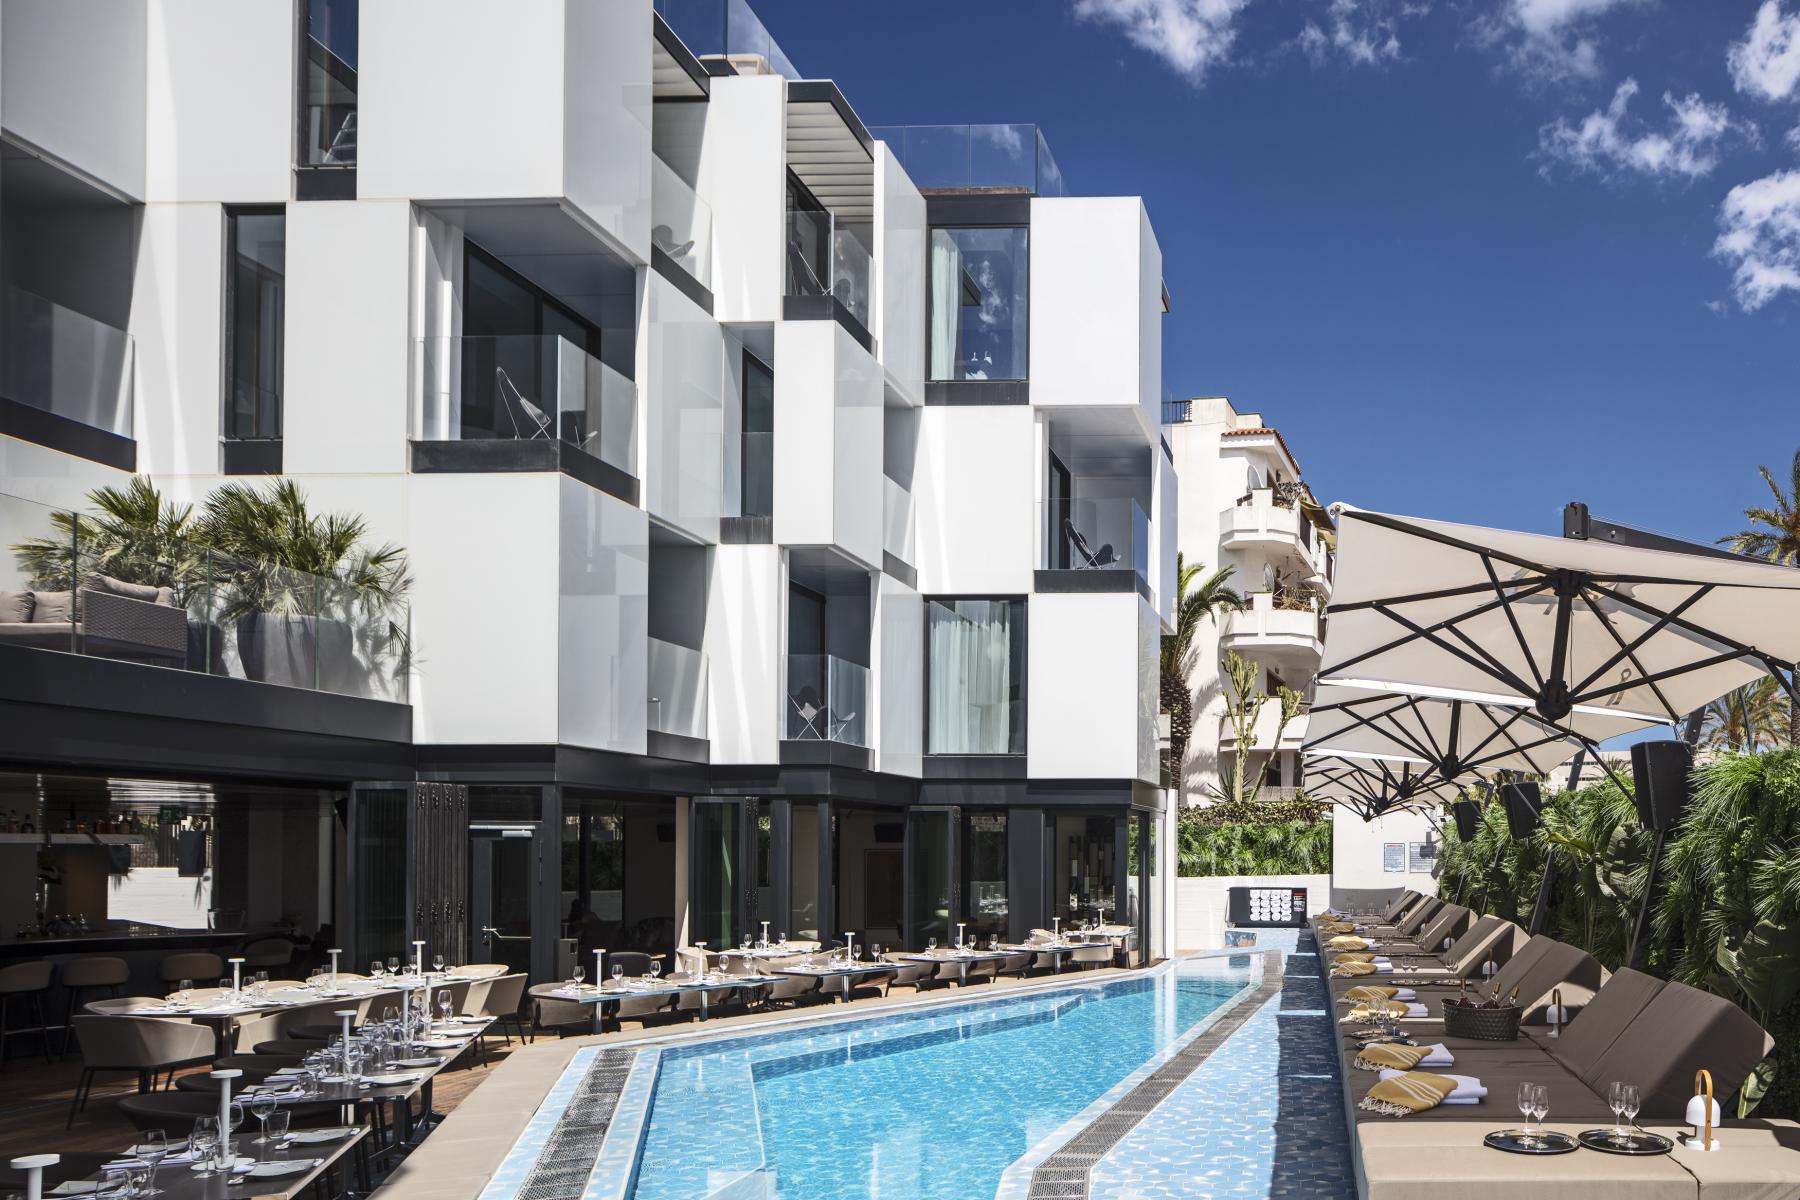 Sir Joan Hotel Interiors in Ibiza by Baranowitz + Kronenberg